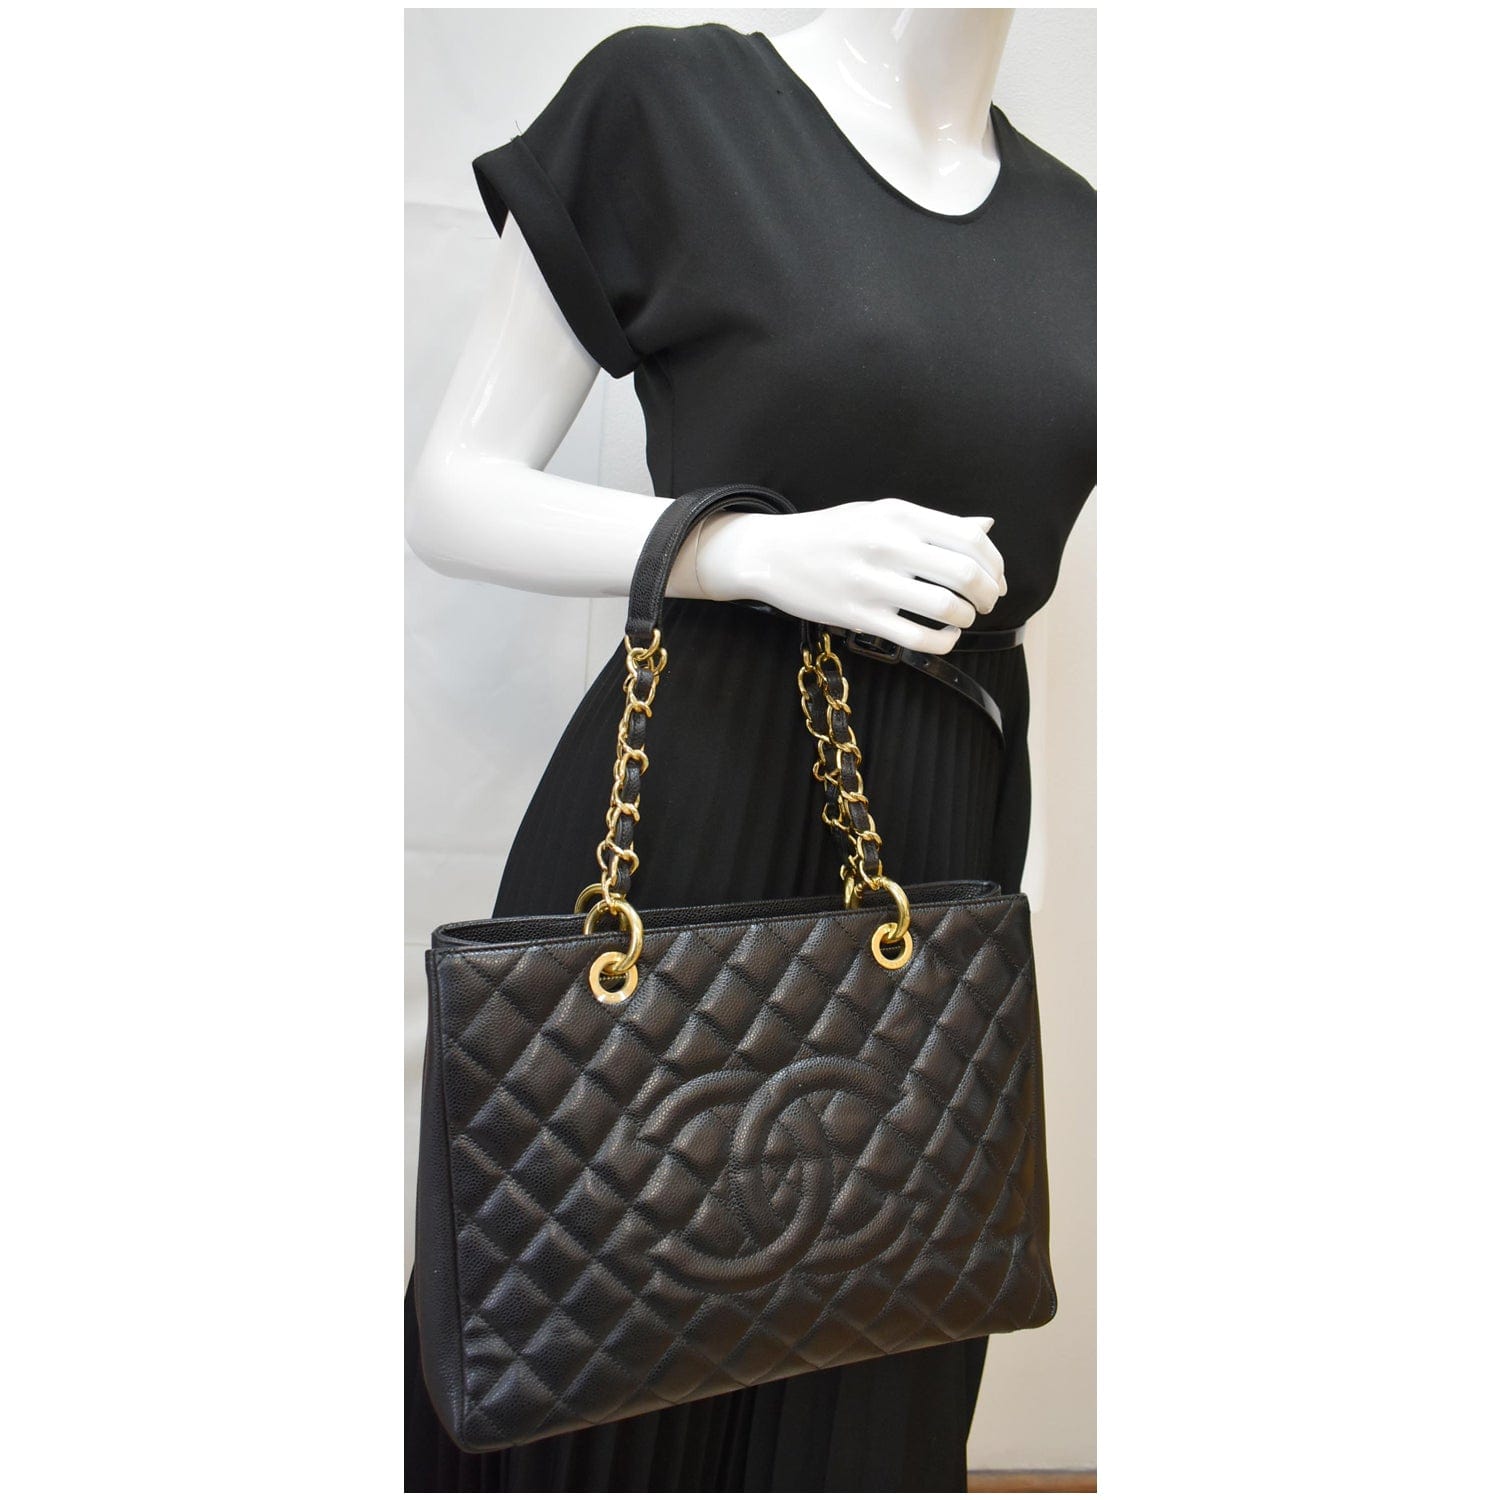 Chanel Grand Shopping GST Caviar Leather Tote Bag Black